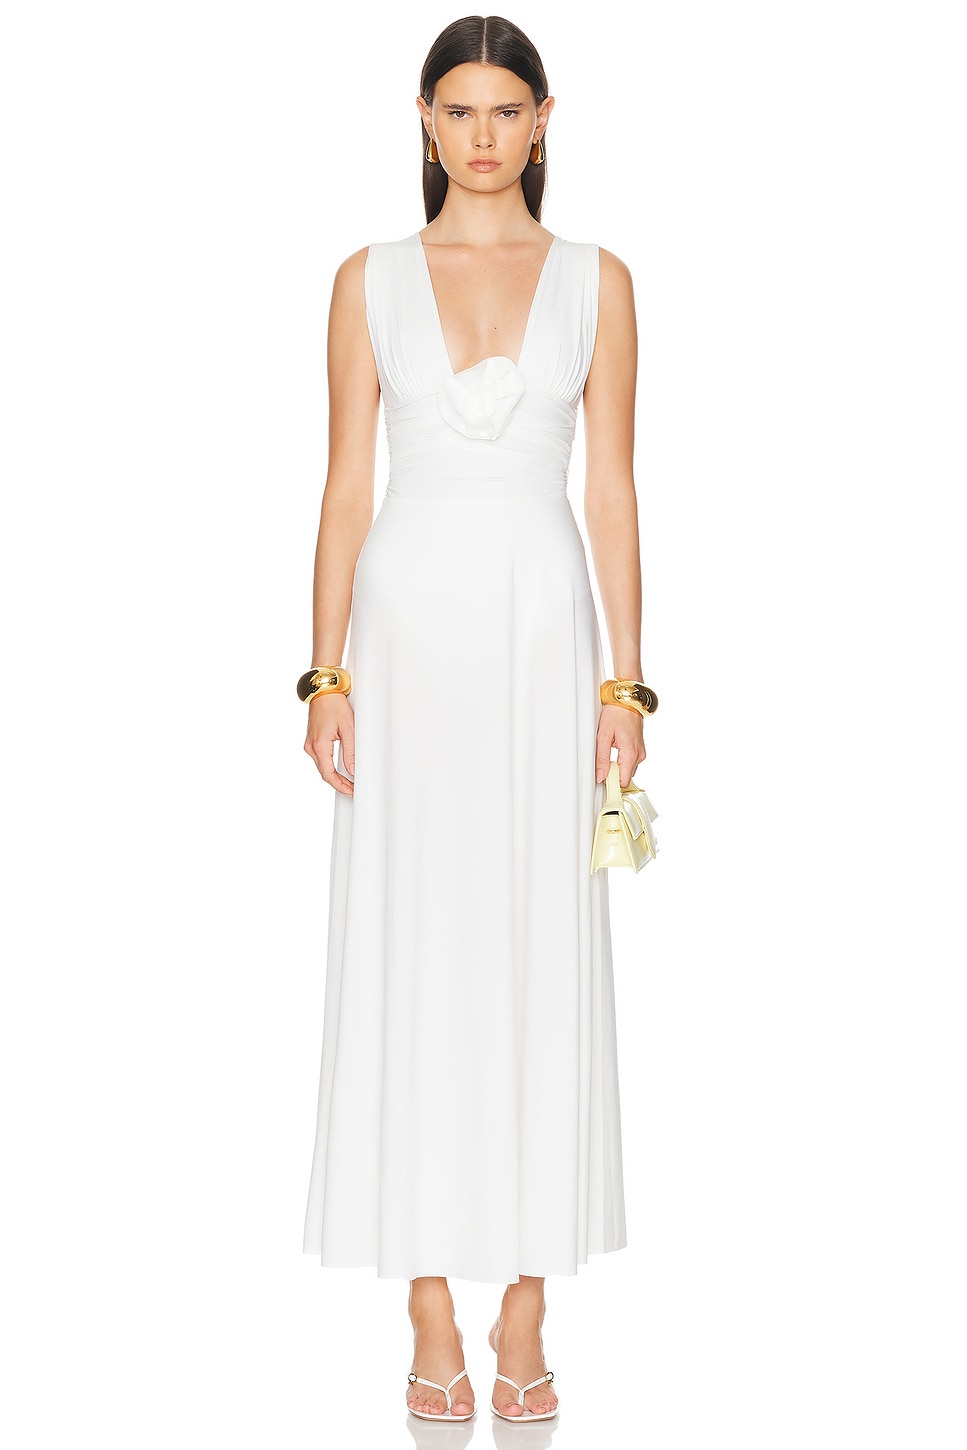 Orinoco Dress in White